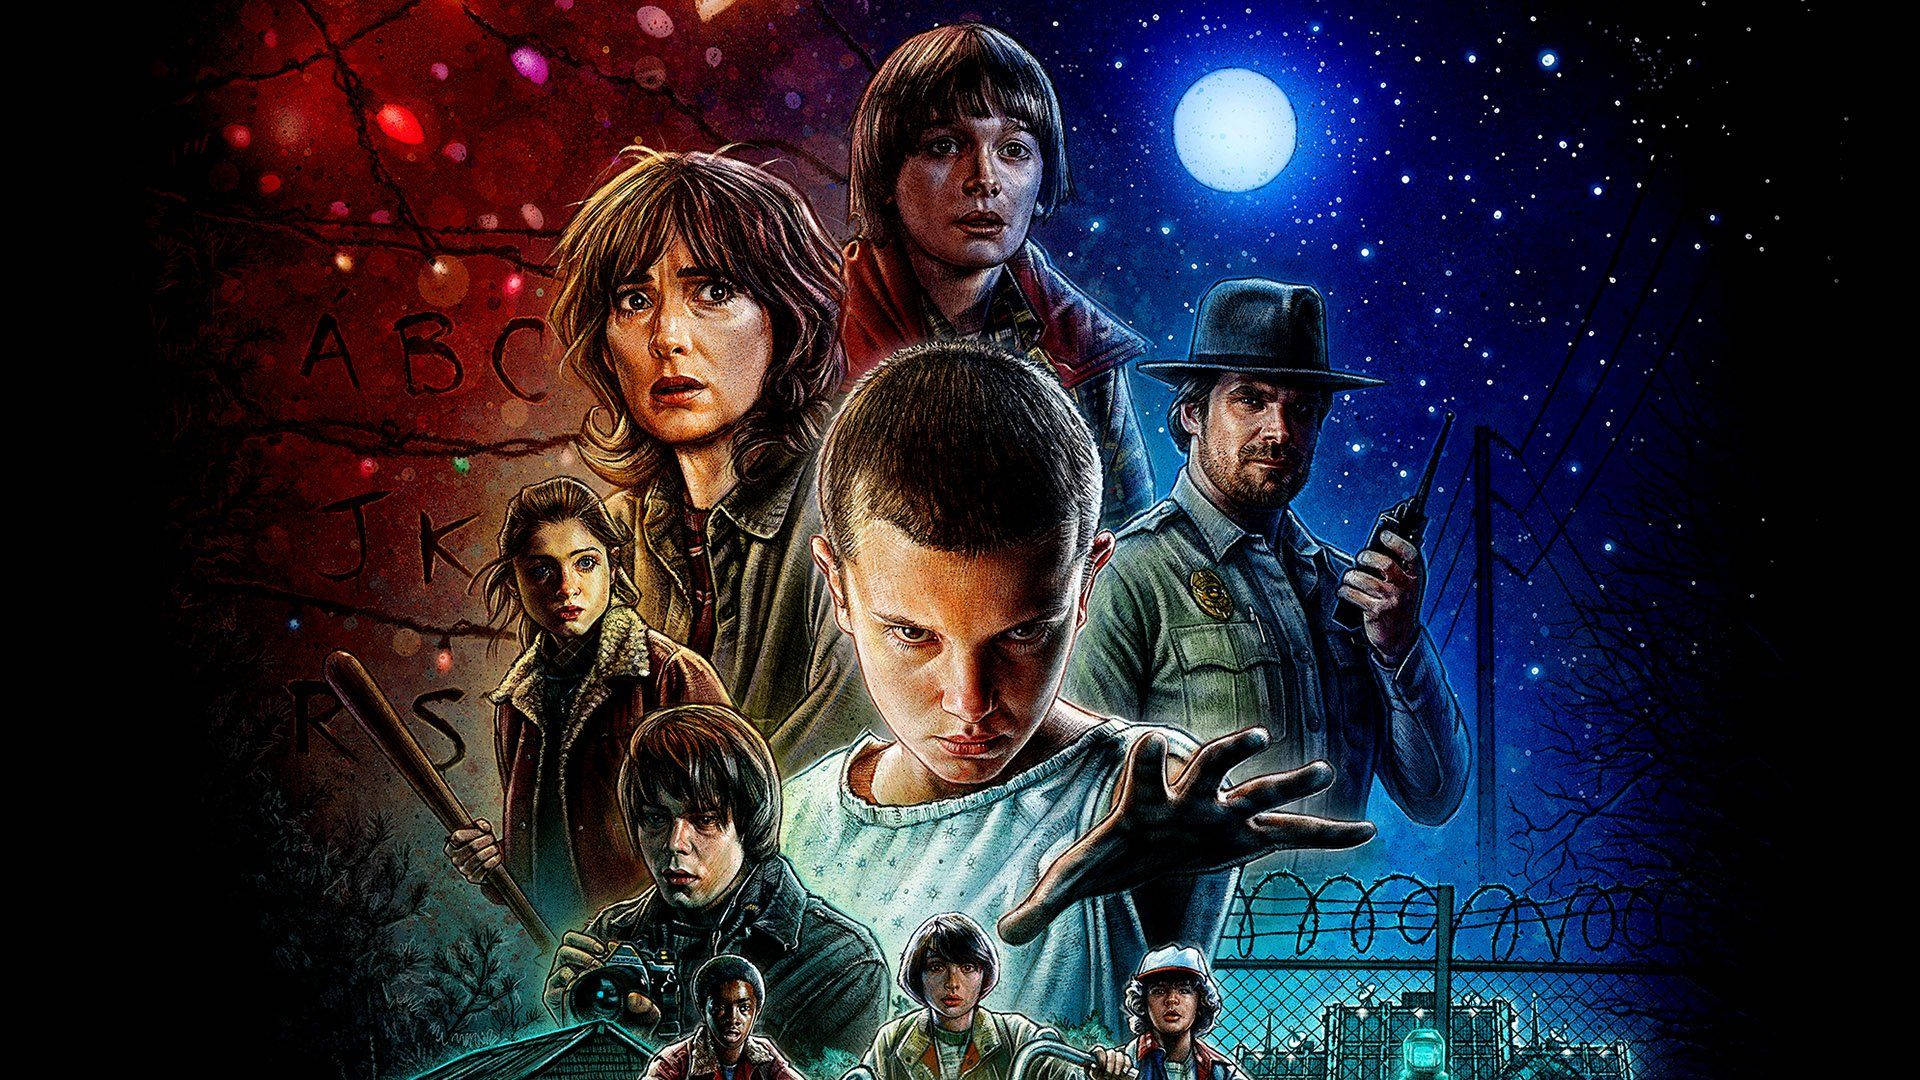 "Eleven from Stranger Things" Wallpaper